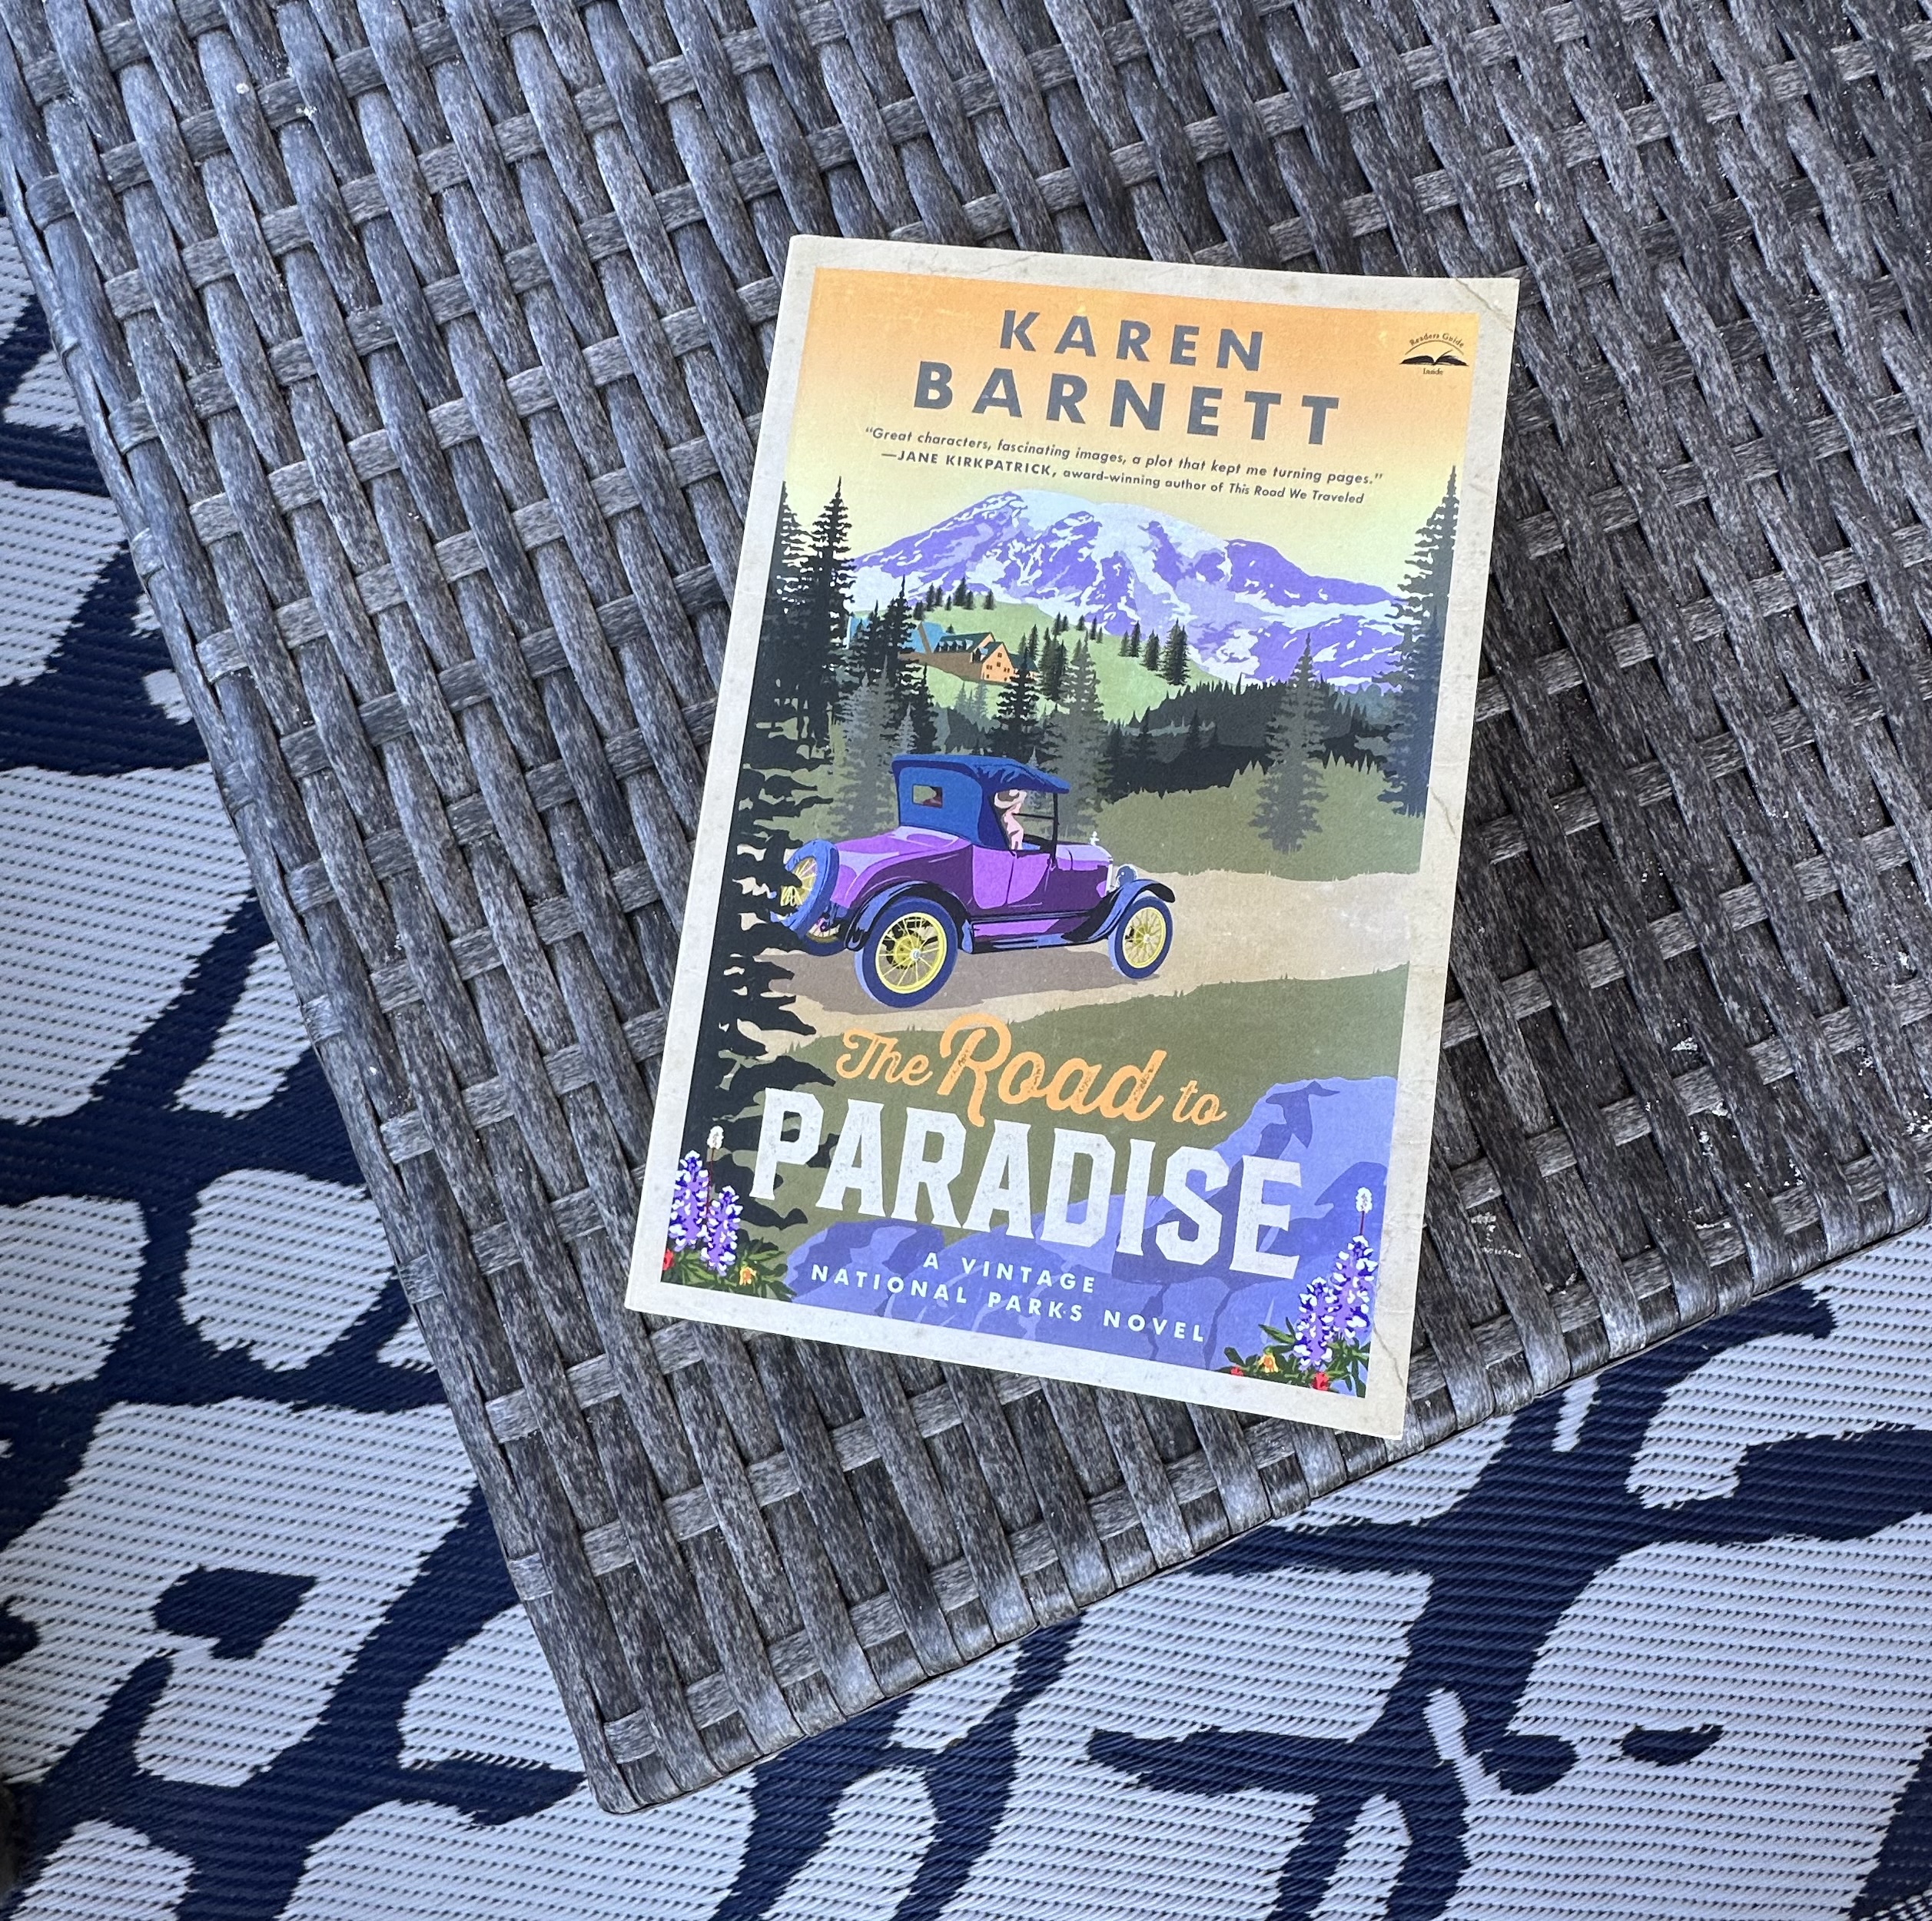 The Road to Paradise by Karen Barnett- a Vintage National Parks Novel